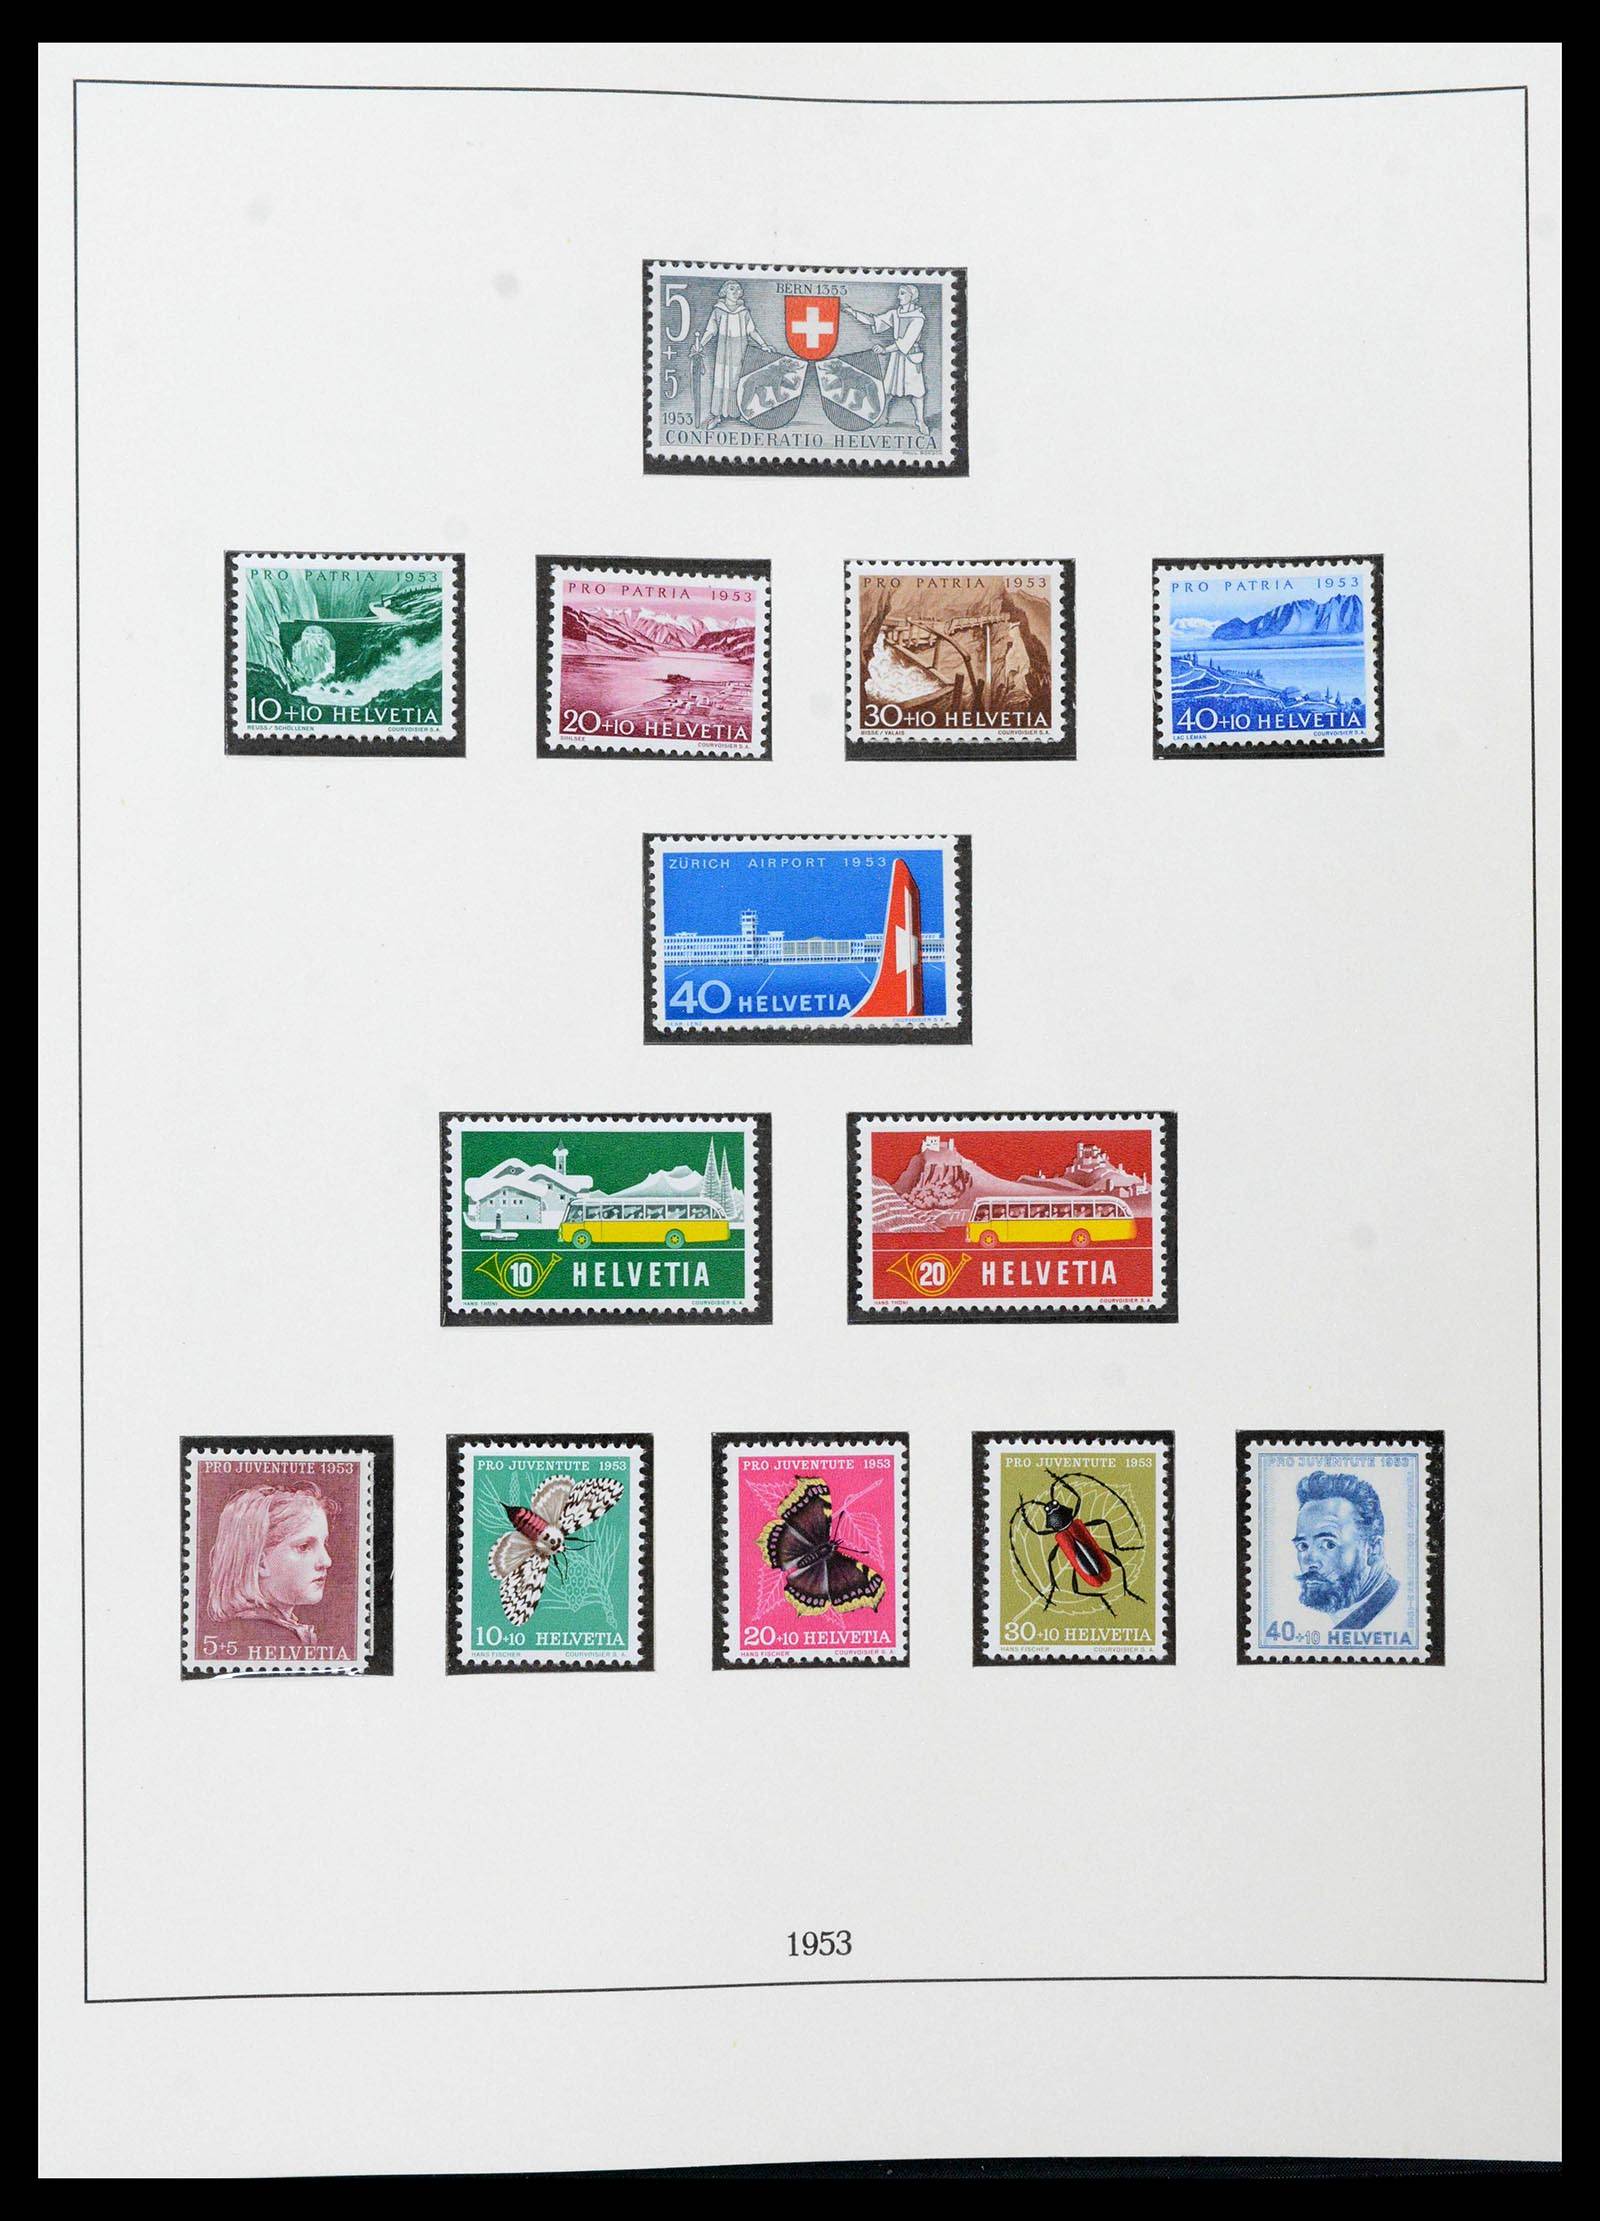 39235 0050 - Stamp collection 39235 Switzerland 1843-1960.